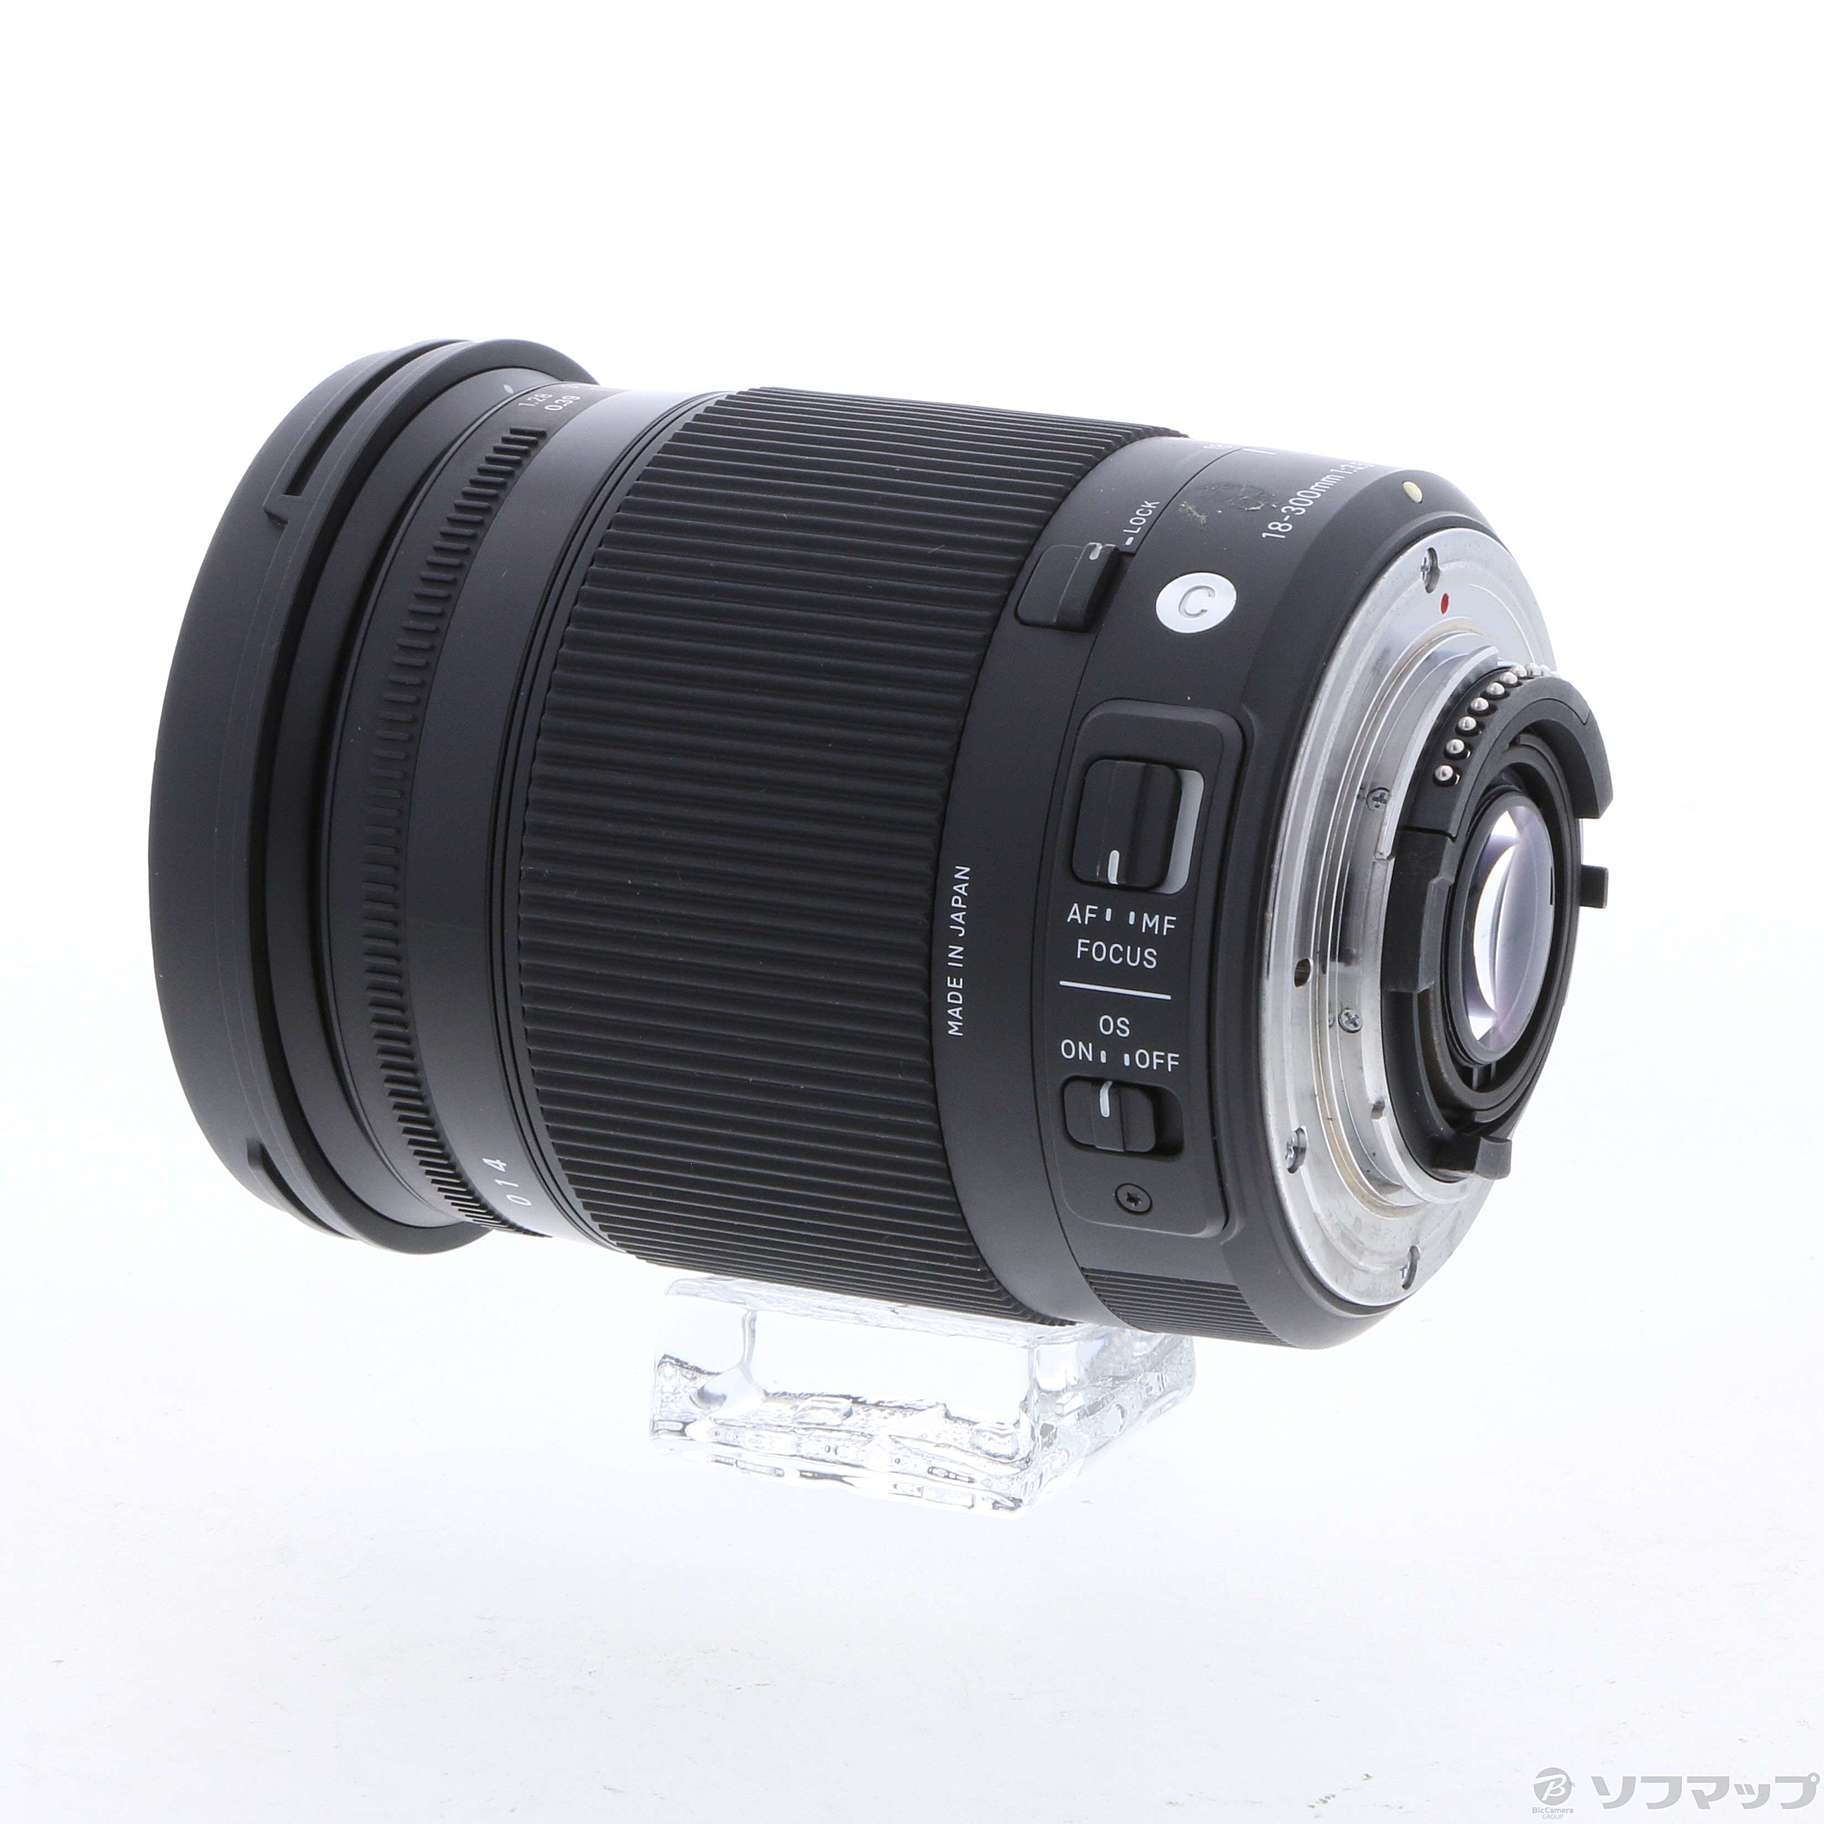 中古】18-300mm F3.5-6.3 DC MACRO OS HSM (Nikon用) Contemporary